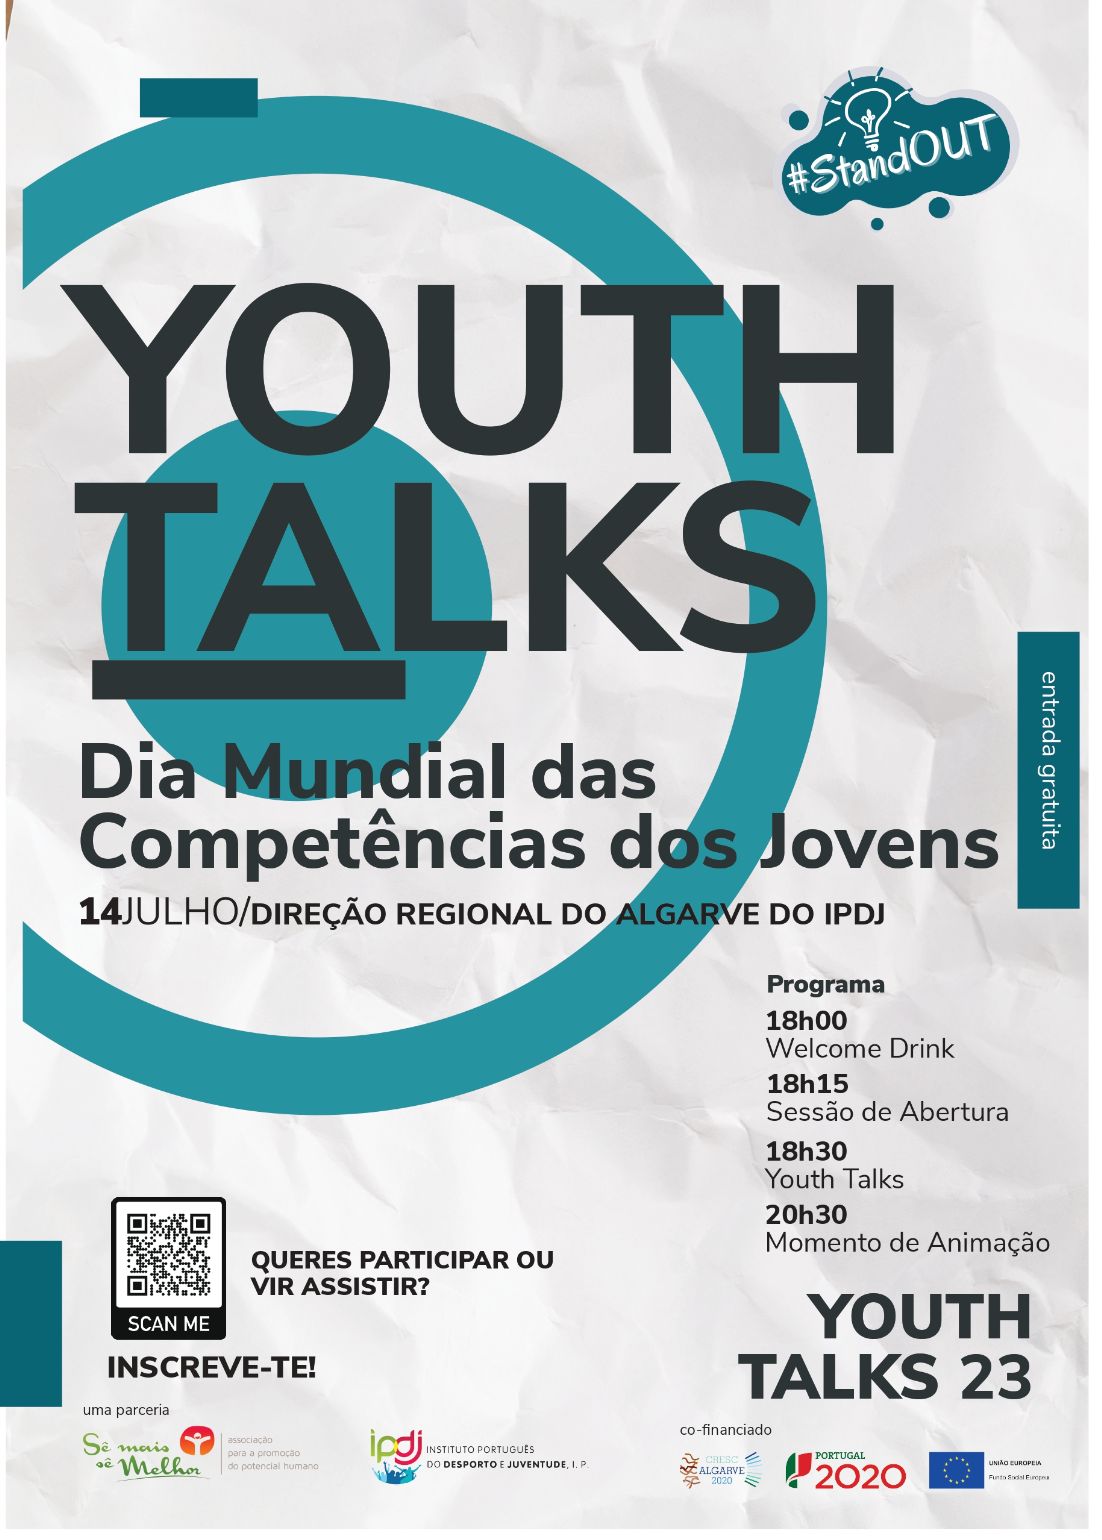 “Youth Talks”